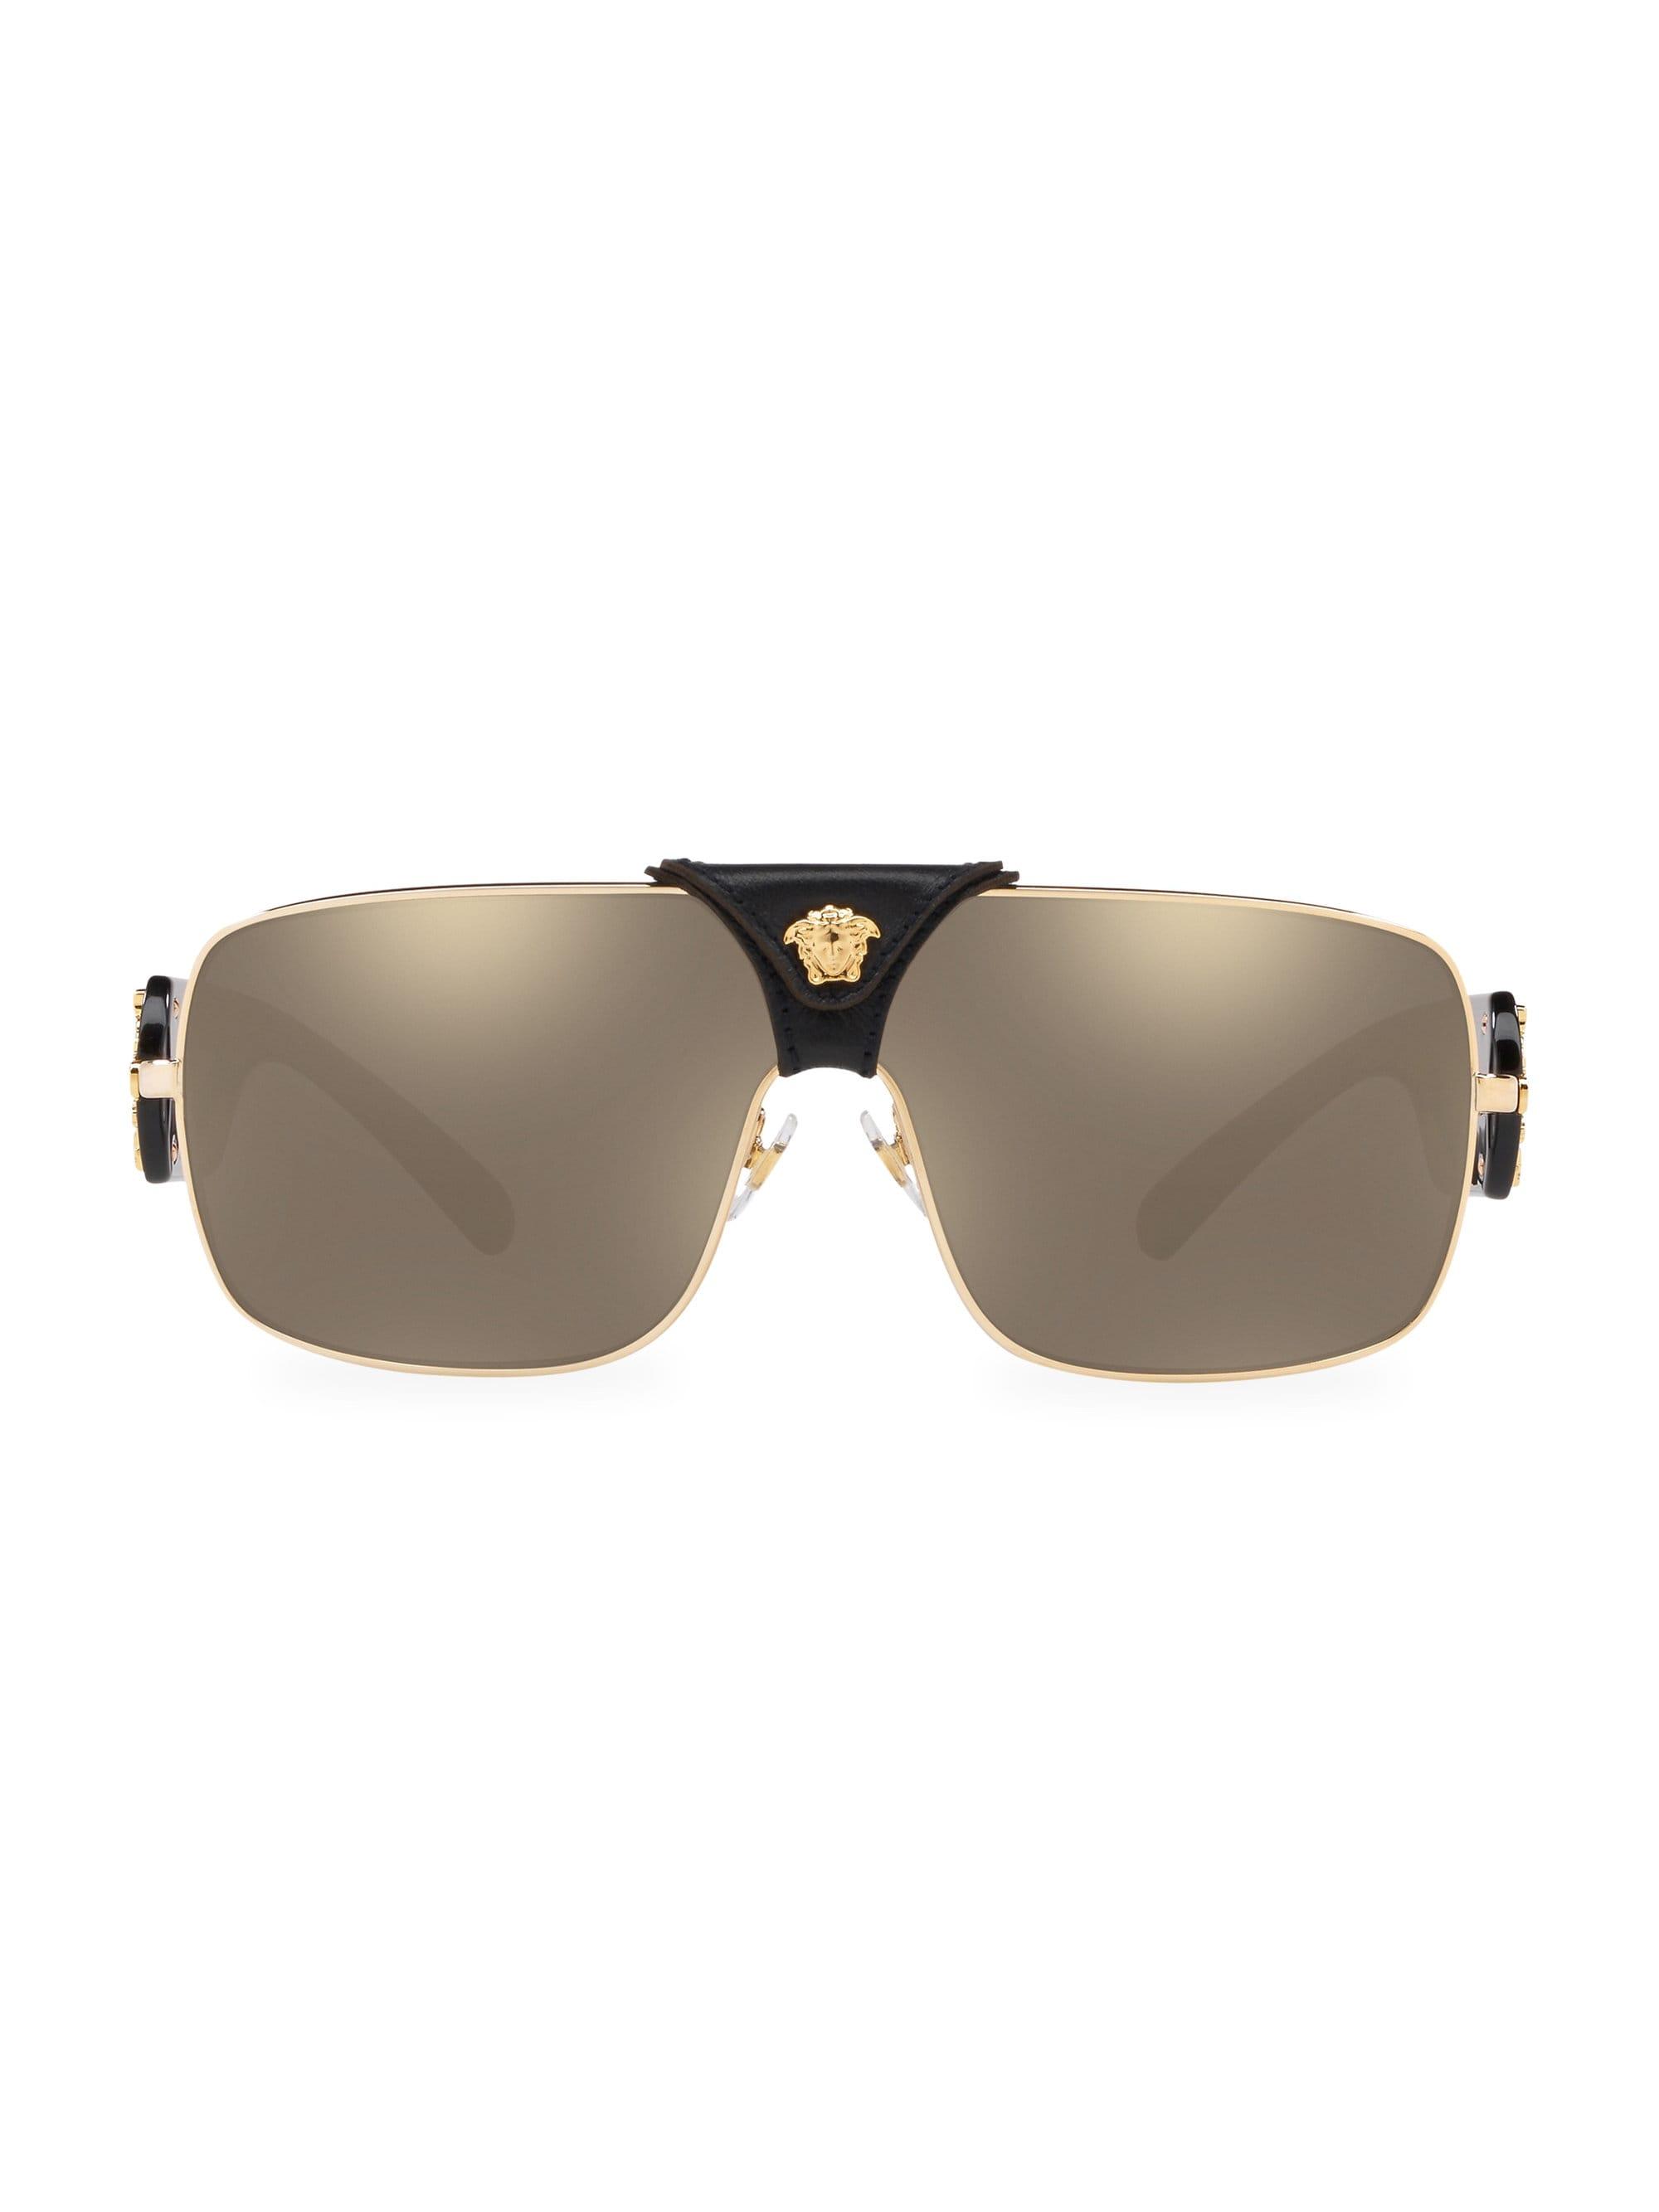 Versace Men's Squared Baroque 138mm Aviator Sunglasses - Brown Gold in ...